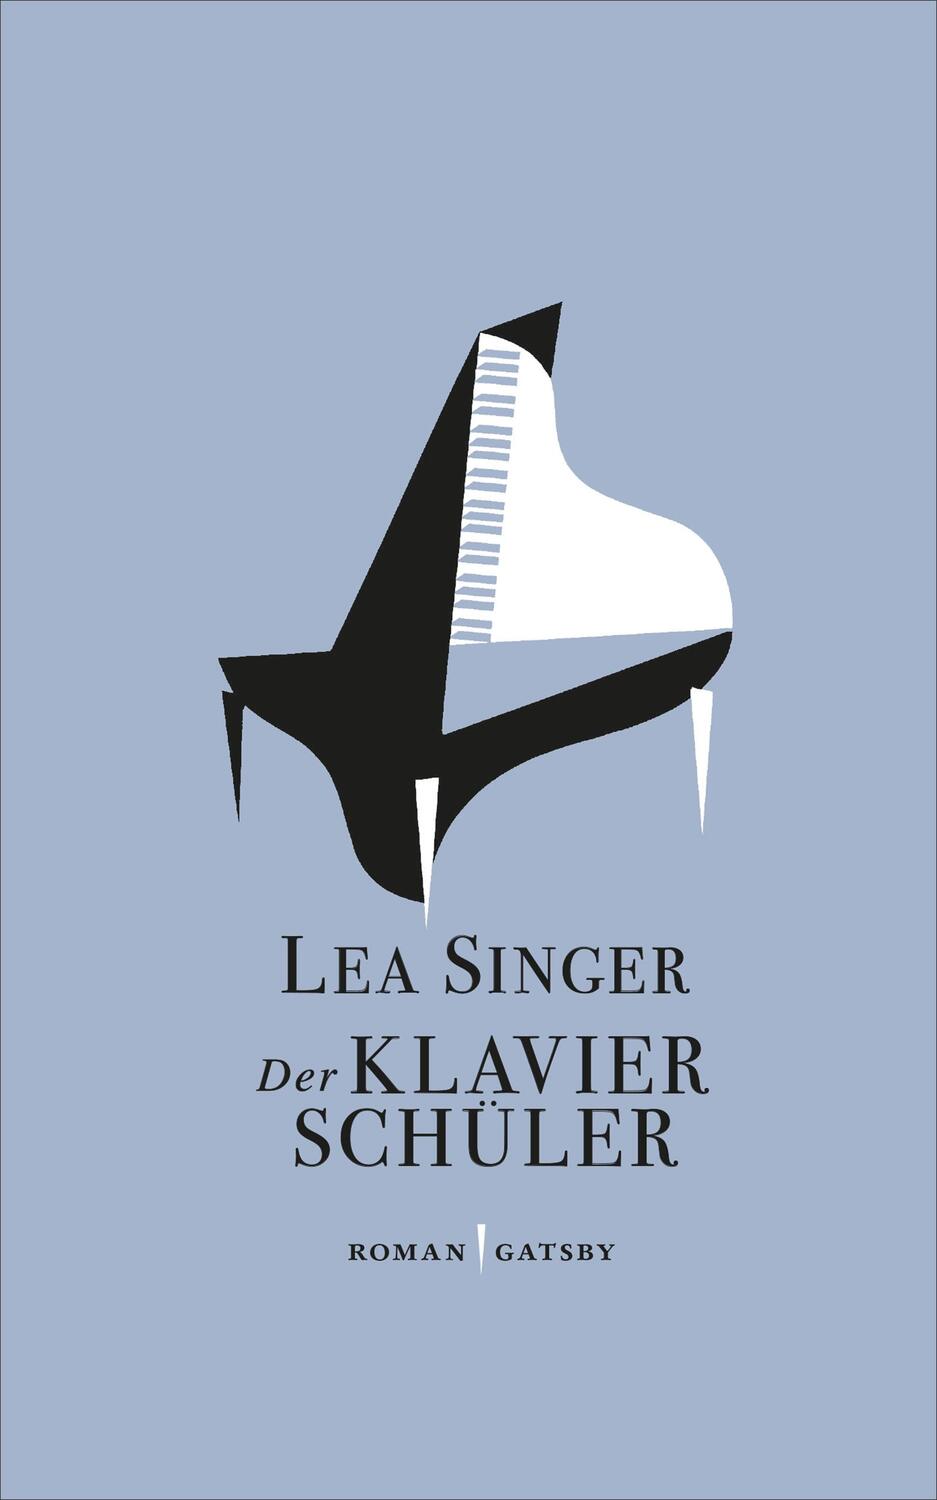 Der Klavierschüler - Singer, Lea